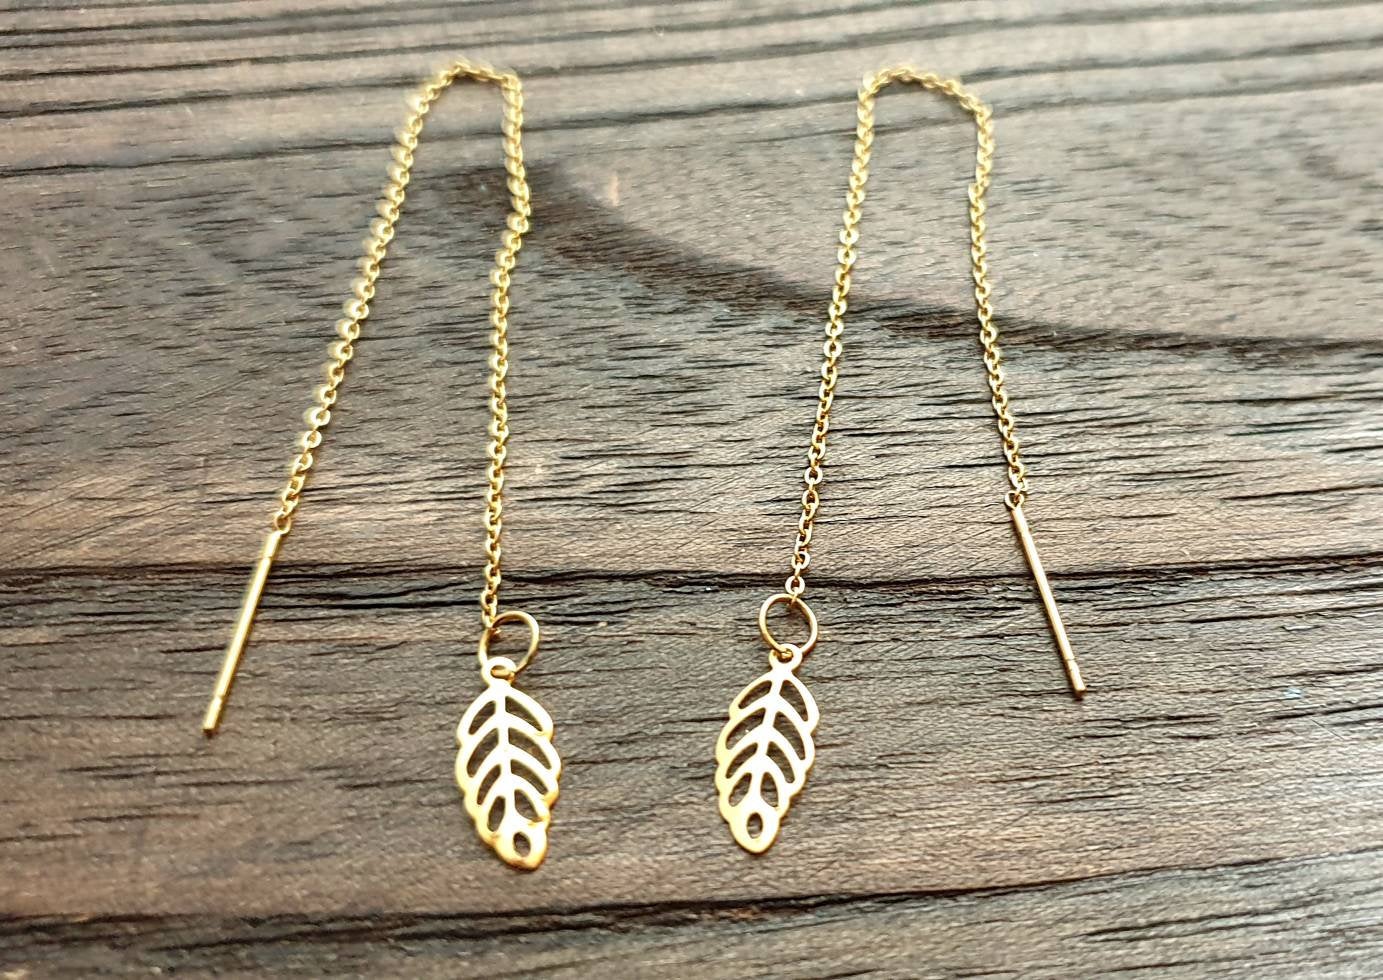 Tiny Leaf Gold Stainless Steel Dangle Thread Earrings, Threader, Hook, Leverback Earrings.